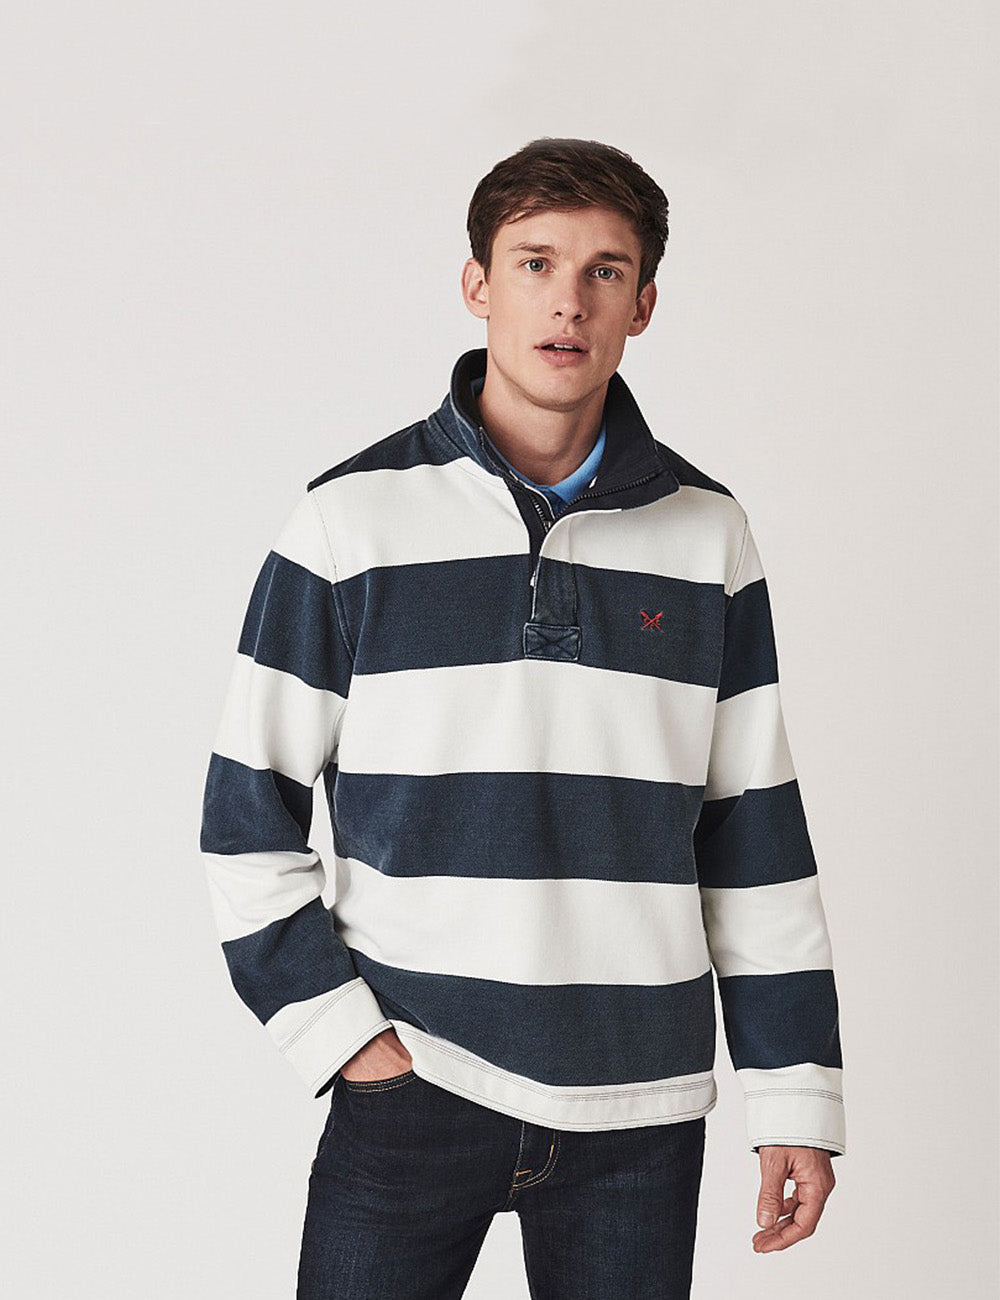 Crew Clothing Padstow Pique Sweatshirt - Navy/White Stripe